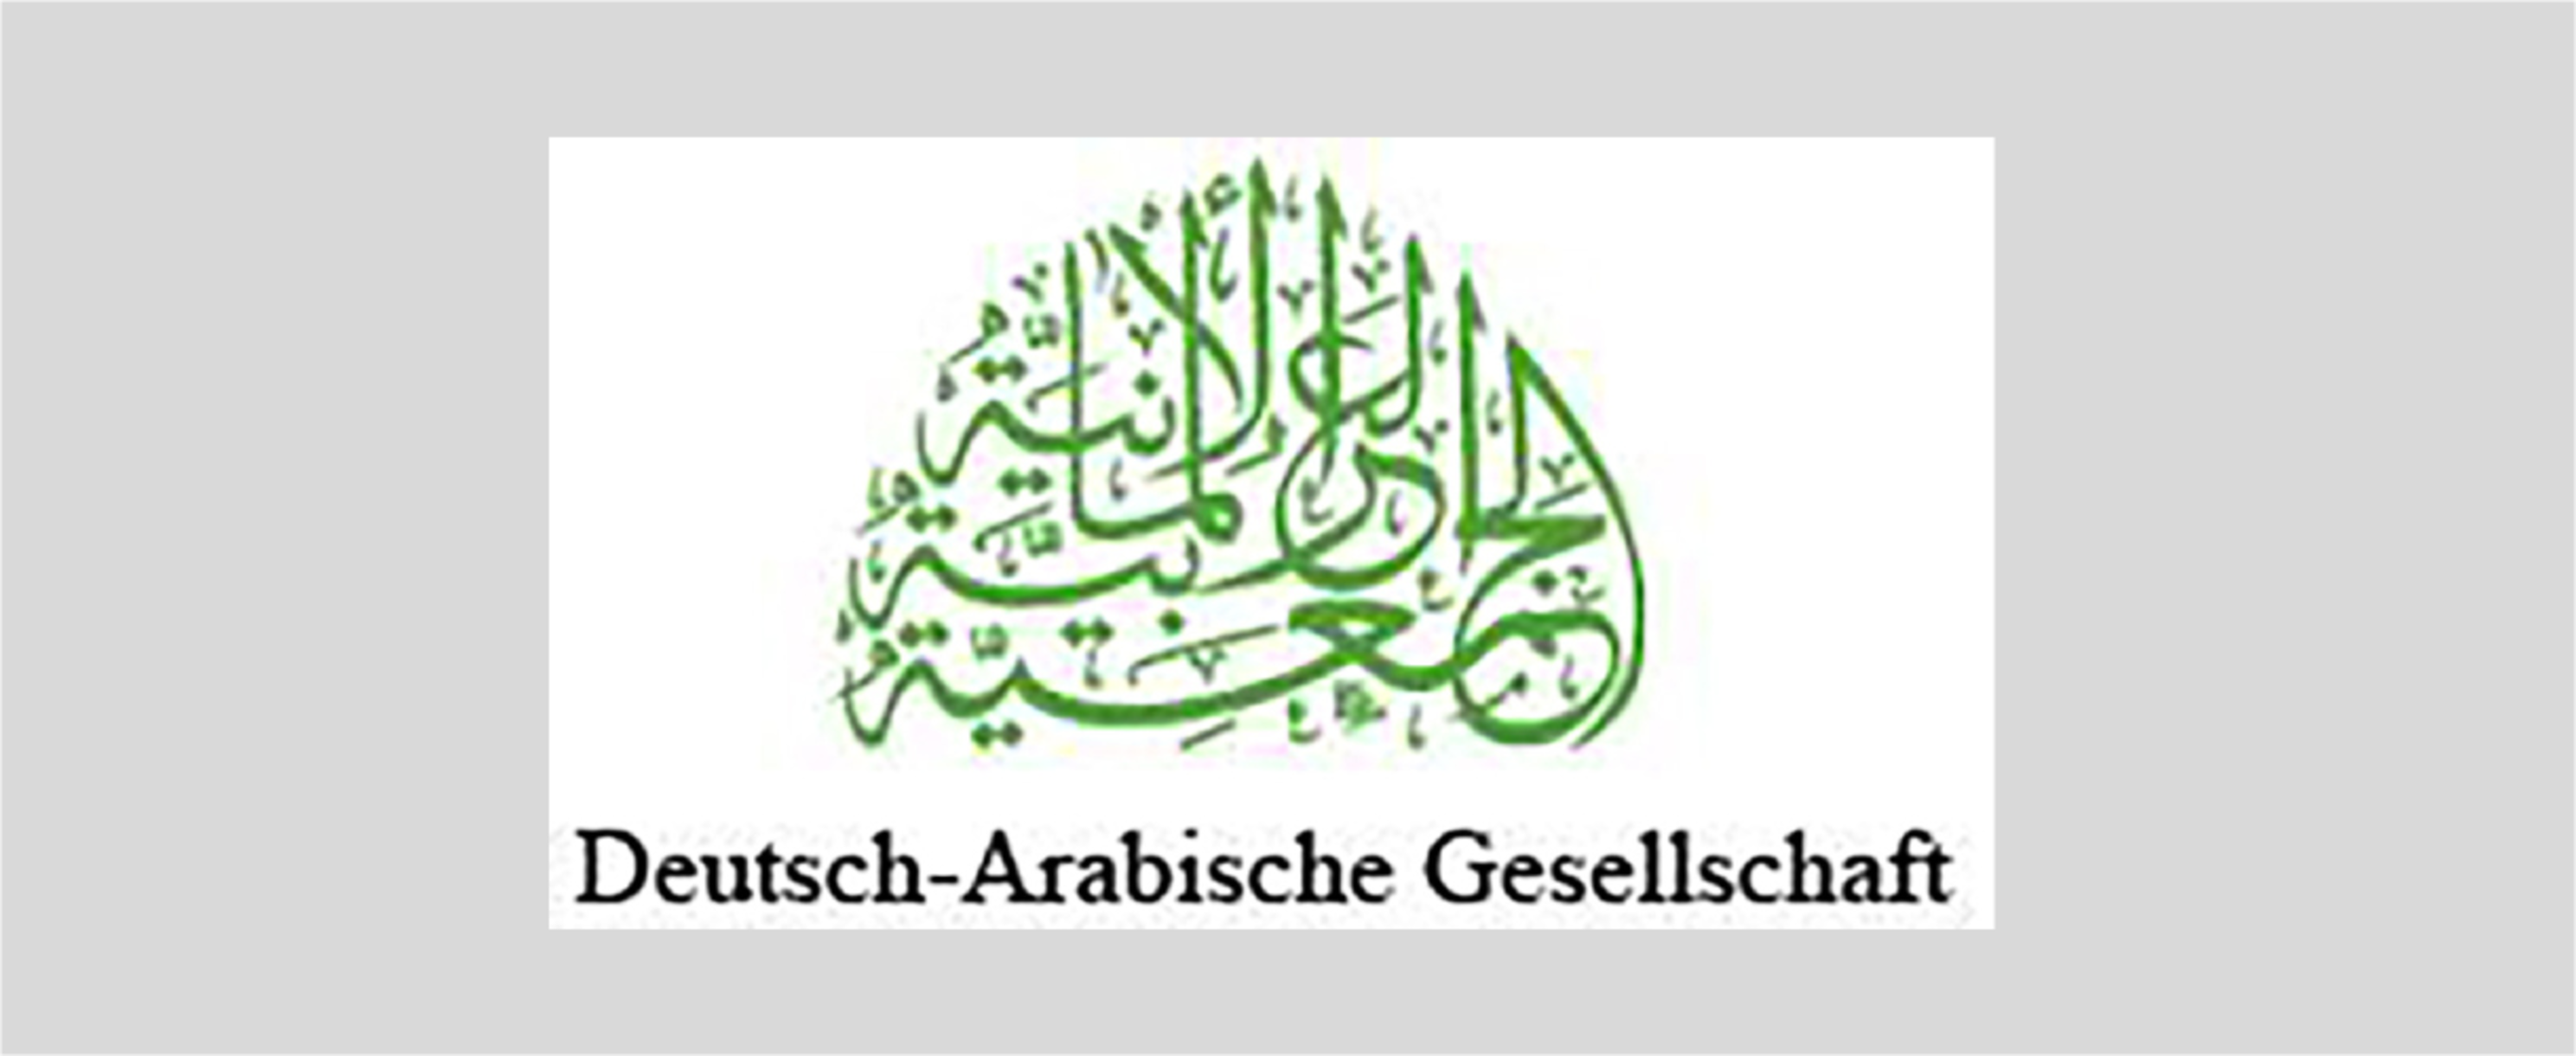 Deutsch-Arabische Gesellschaft - Berlin